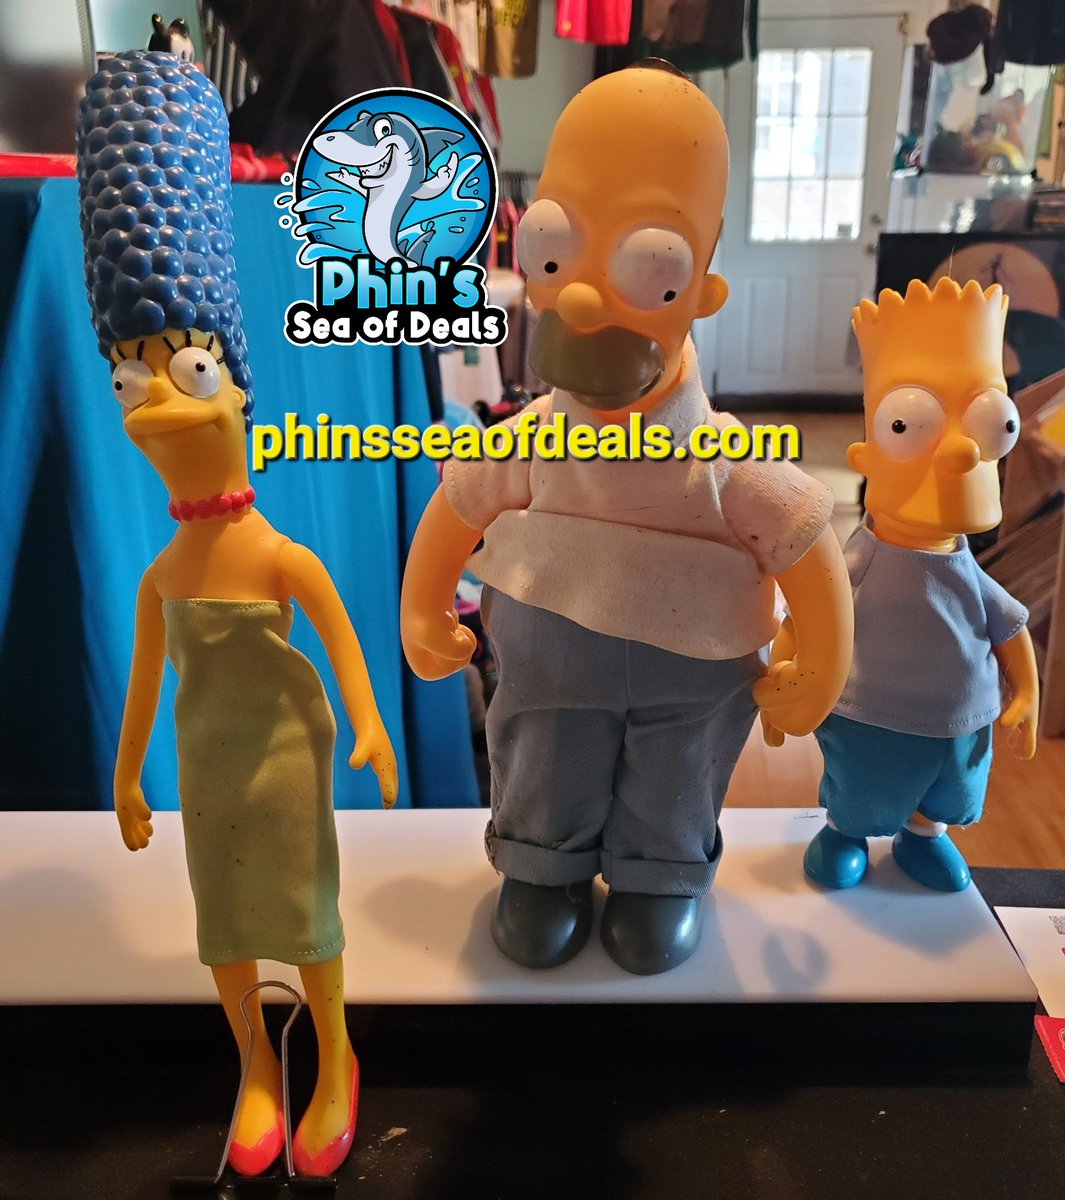 Vintage Simpsons figures from 1990

Phinsseaofdeals.com 

#Phinsseaofdeals #thesimpsons #Simpsons #90s #90scartoons #simpsonsfan #simpsonscollection #simpsonstoys #homer #margesimpson #bartsimpson  #washingtonpa #mcmurraypa #smallbusiness #pittsburghsmallbusiness